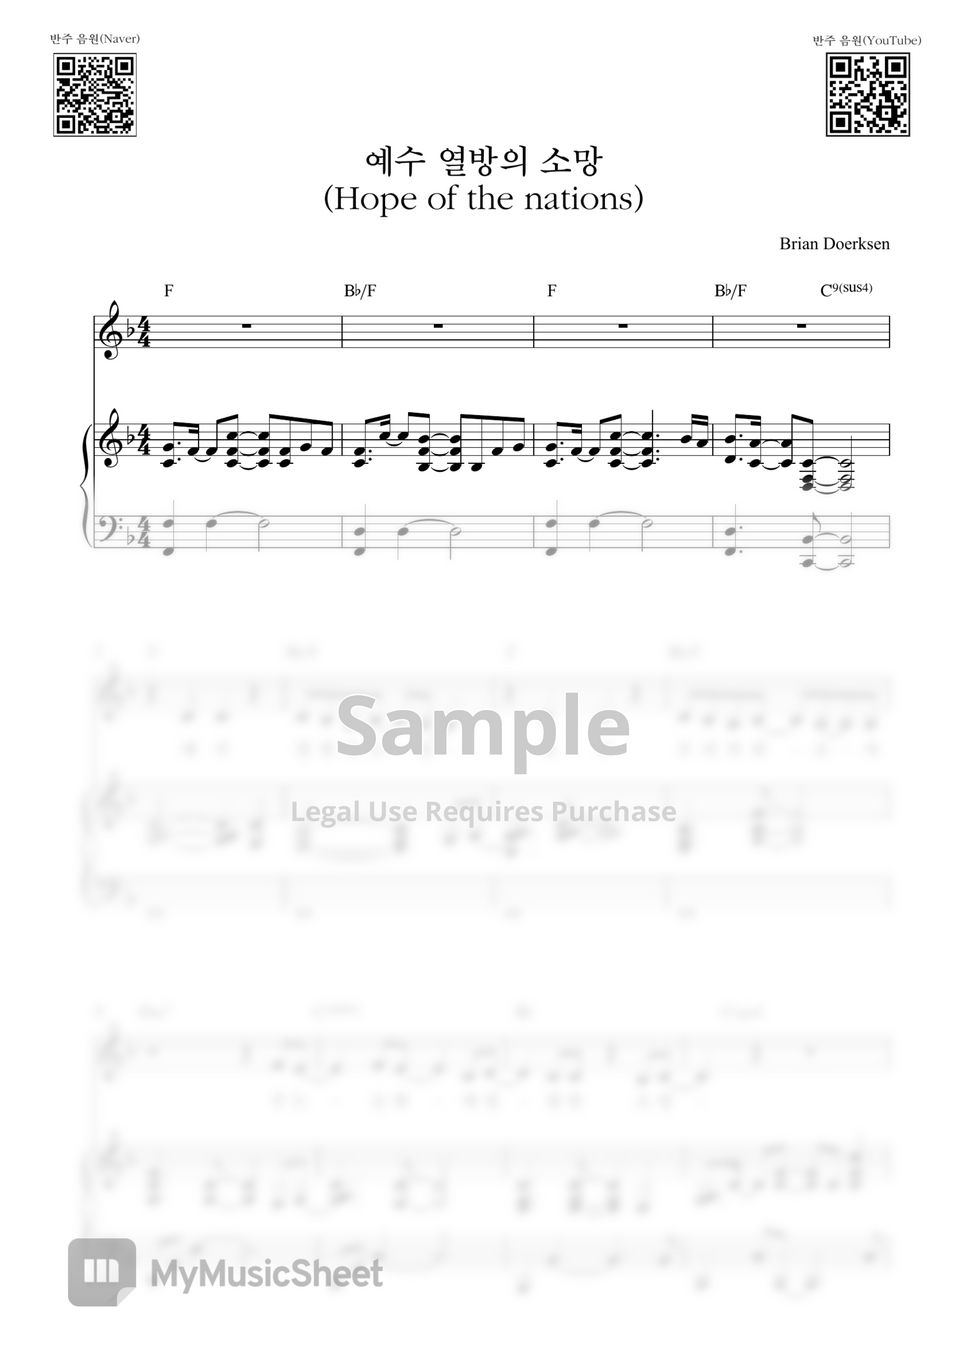 Brian Doerksen - 예수 열방의 소망(Hope of the nations)_F Key (피아노 3단) by Samuel Park